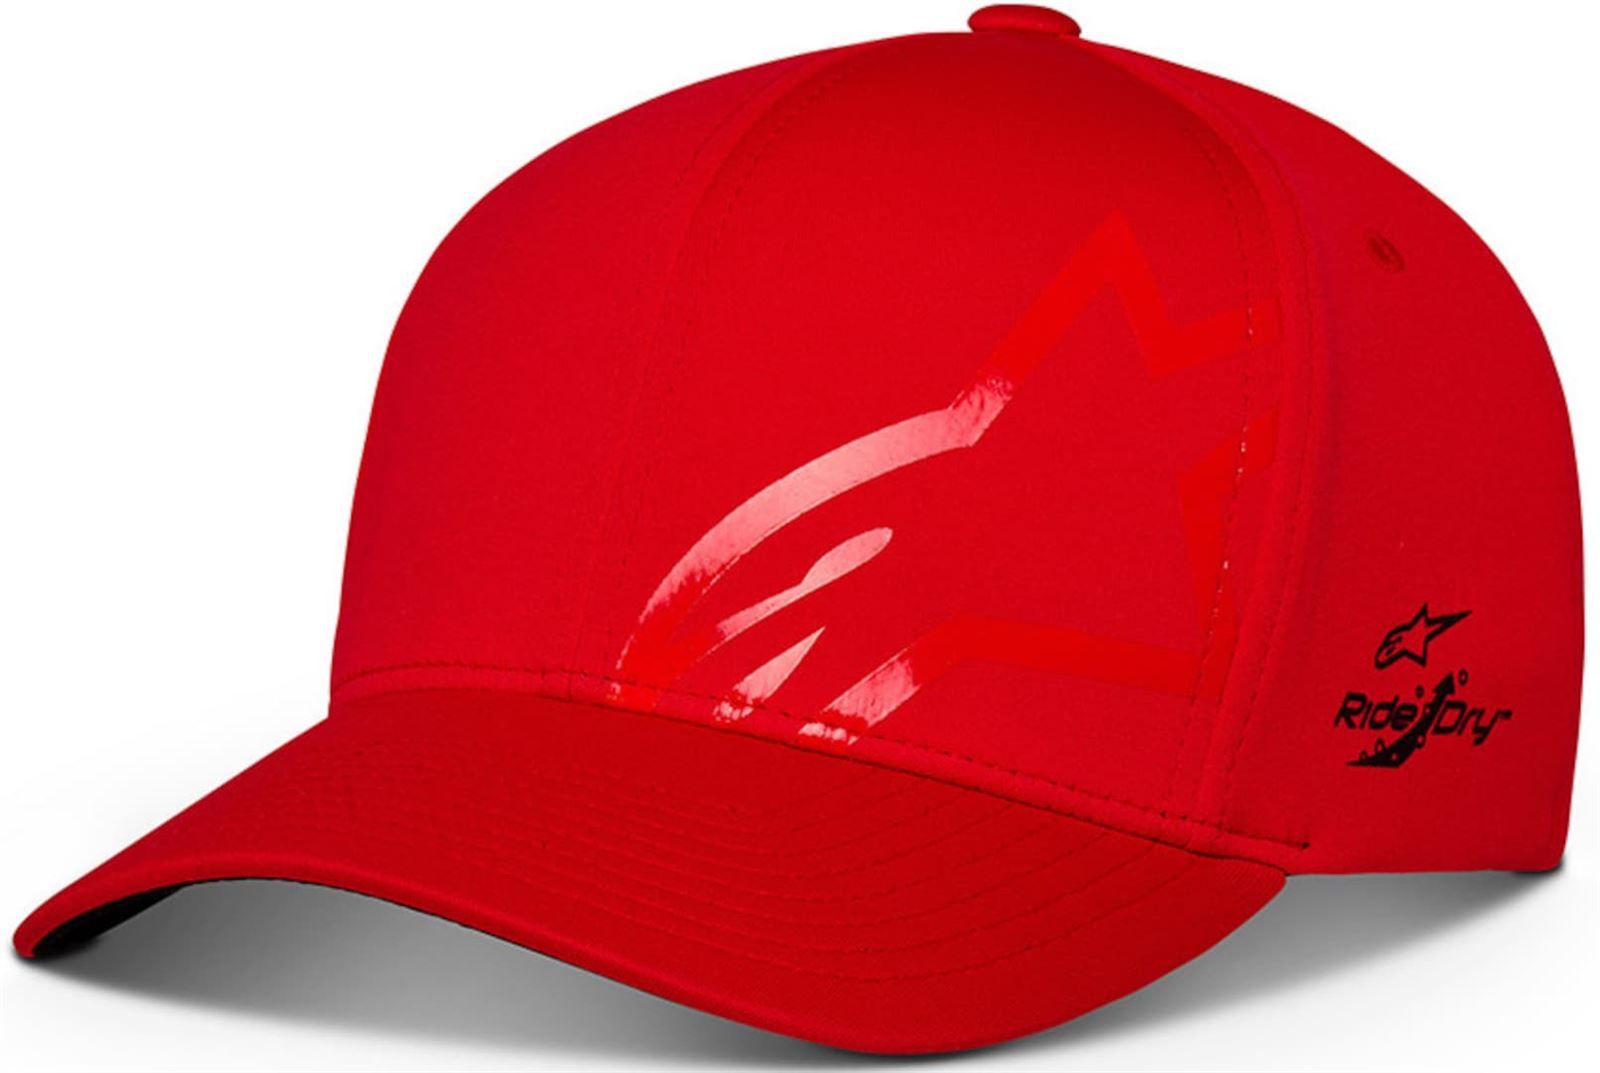 Gorra Alpinestars 1211-81003 30 imperceptible tech hat red - Imagen 1